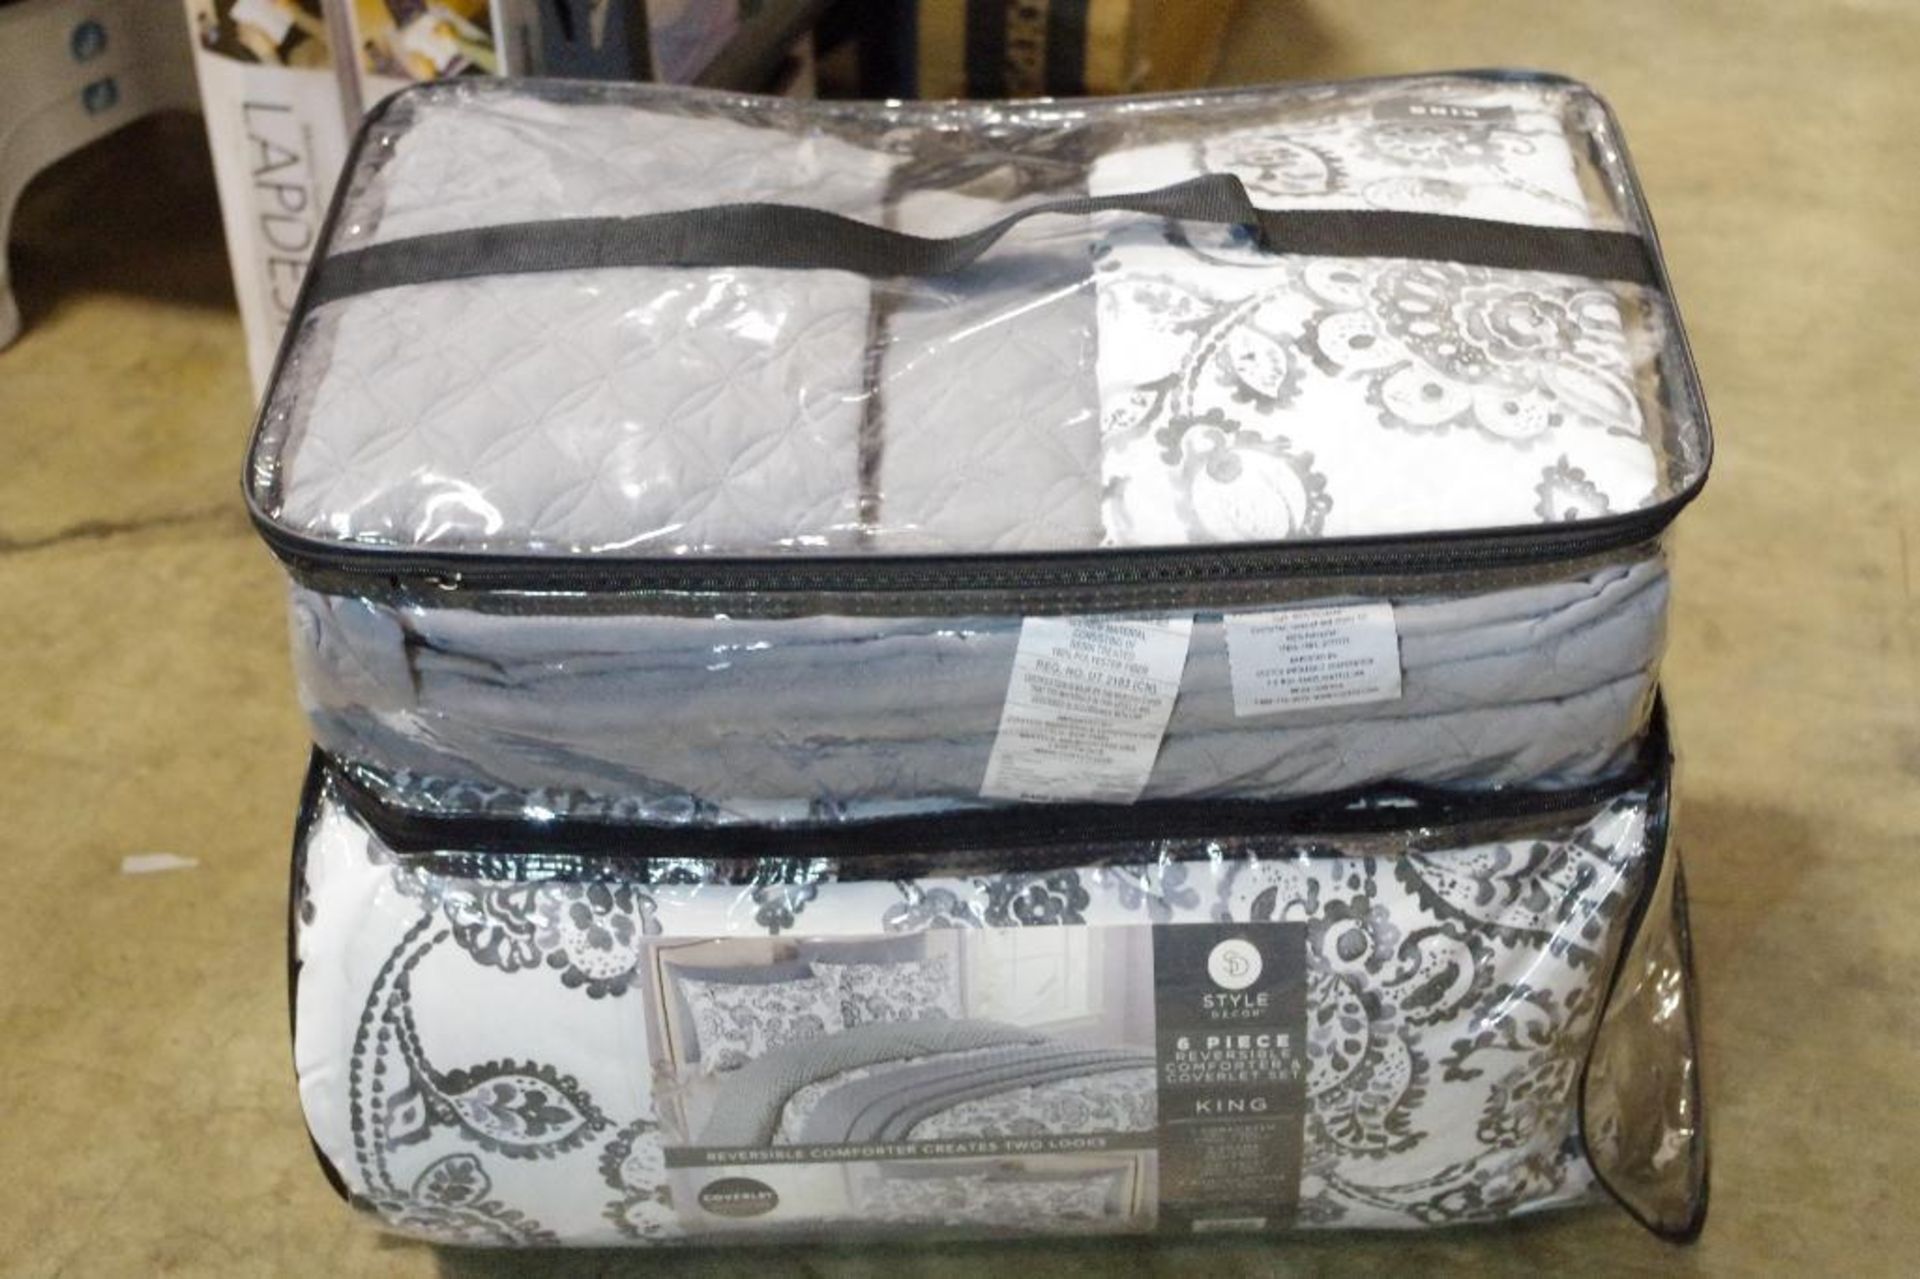 STYLE DECOR King 6-Piece Reversible Comforter & Coverlet Set, Store Return - Image 4 of 4